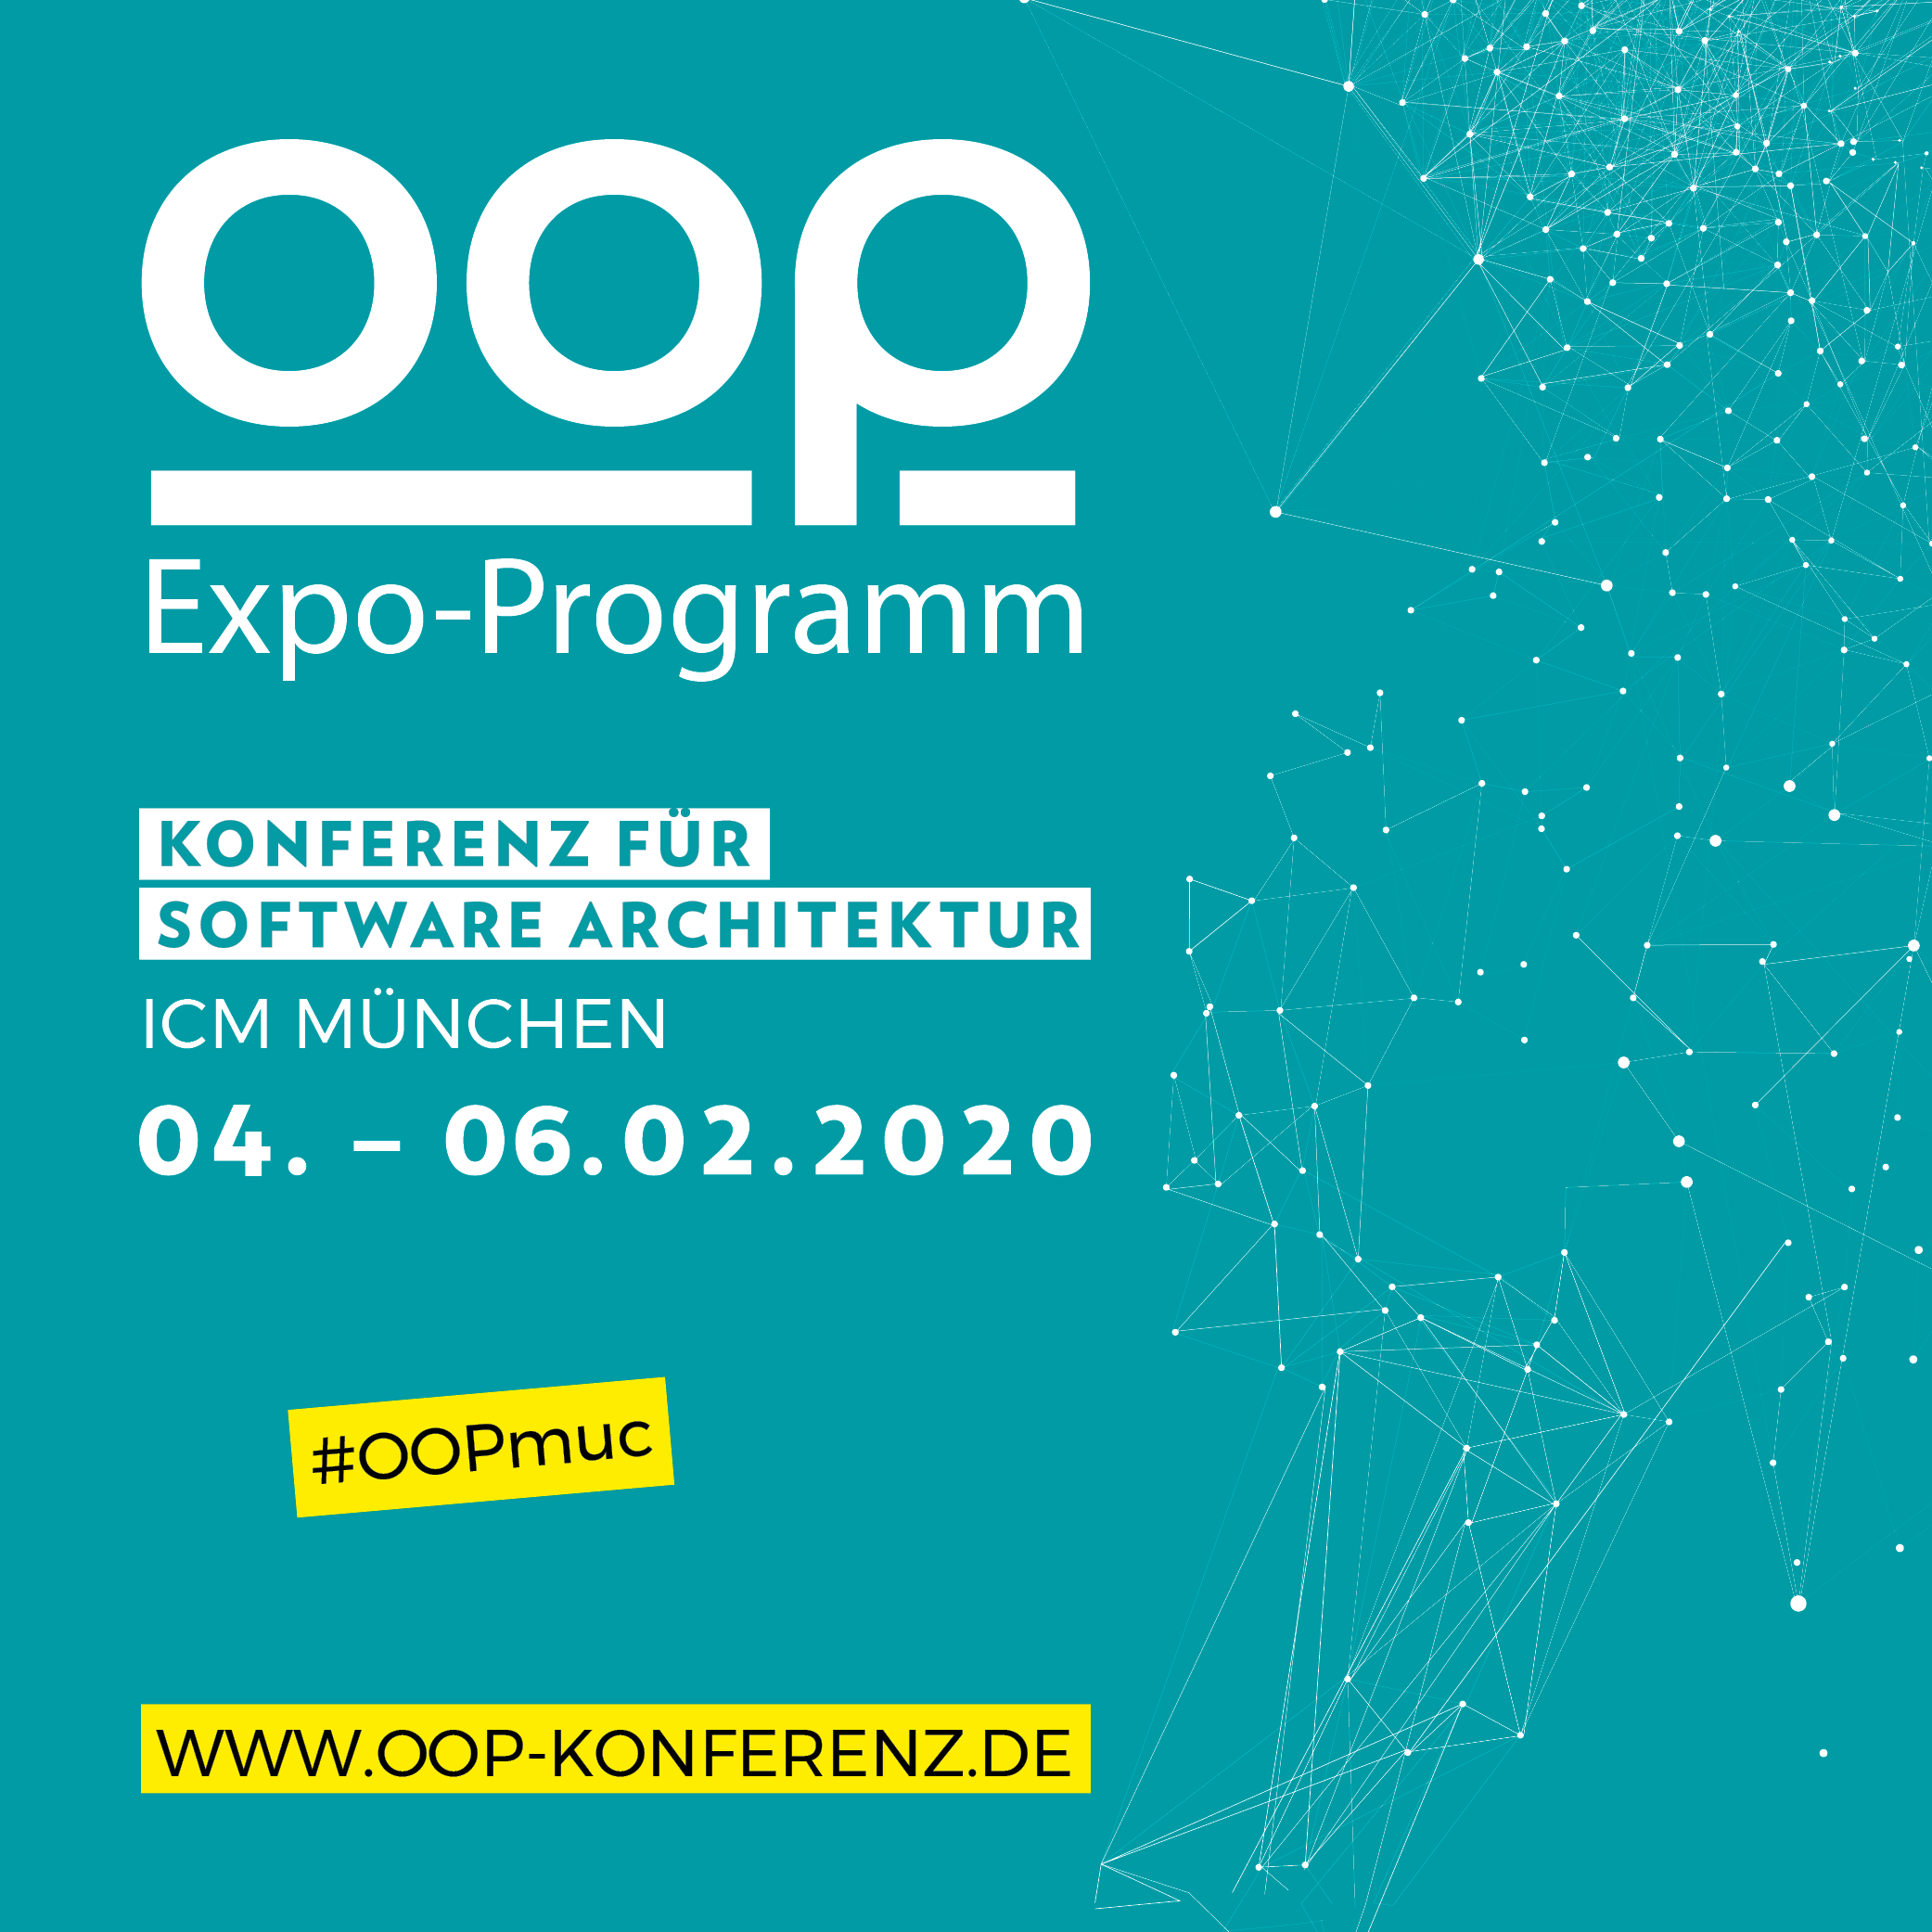 OOP 2020 | Kostenfreies Expo-Programm vom 04.-06. Februar in München